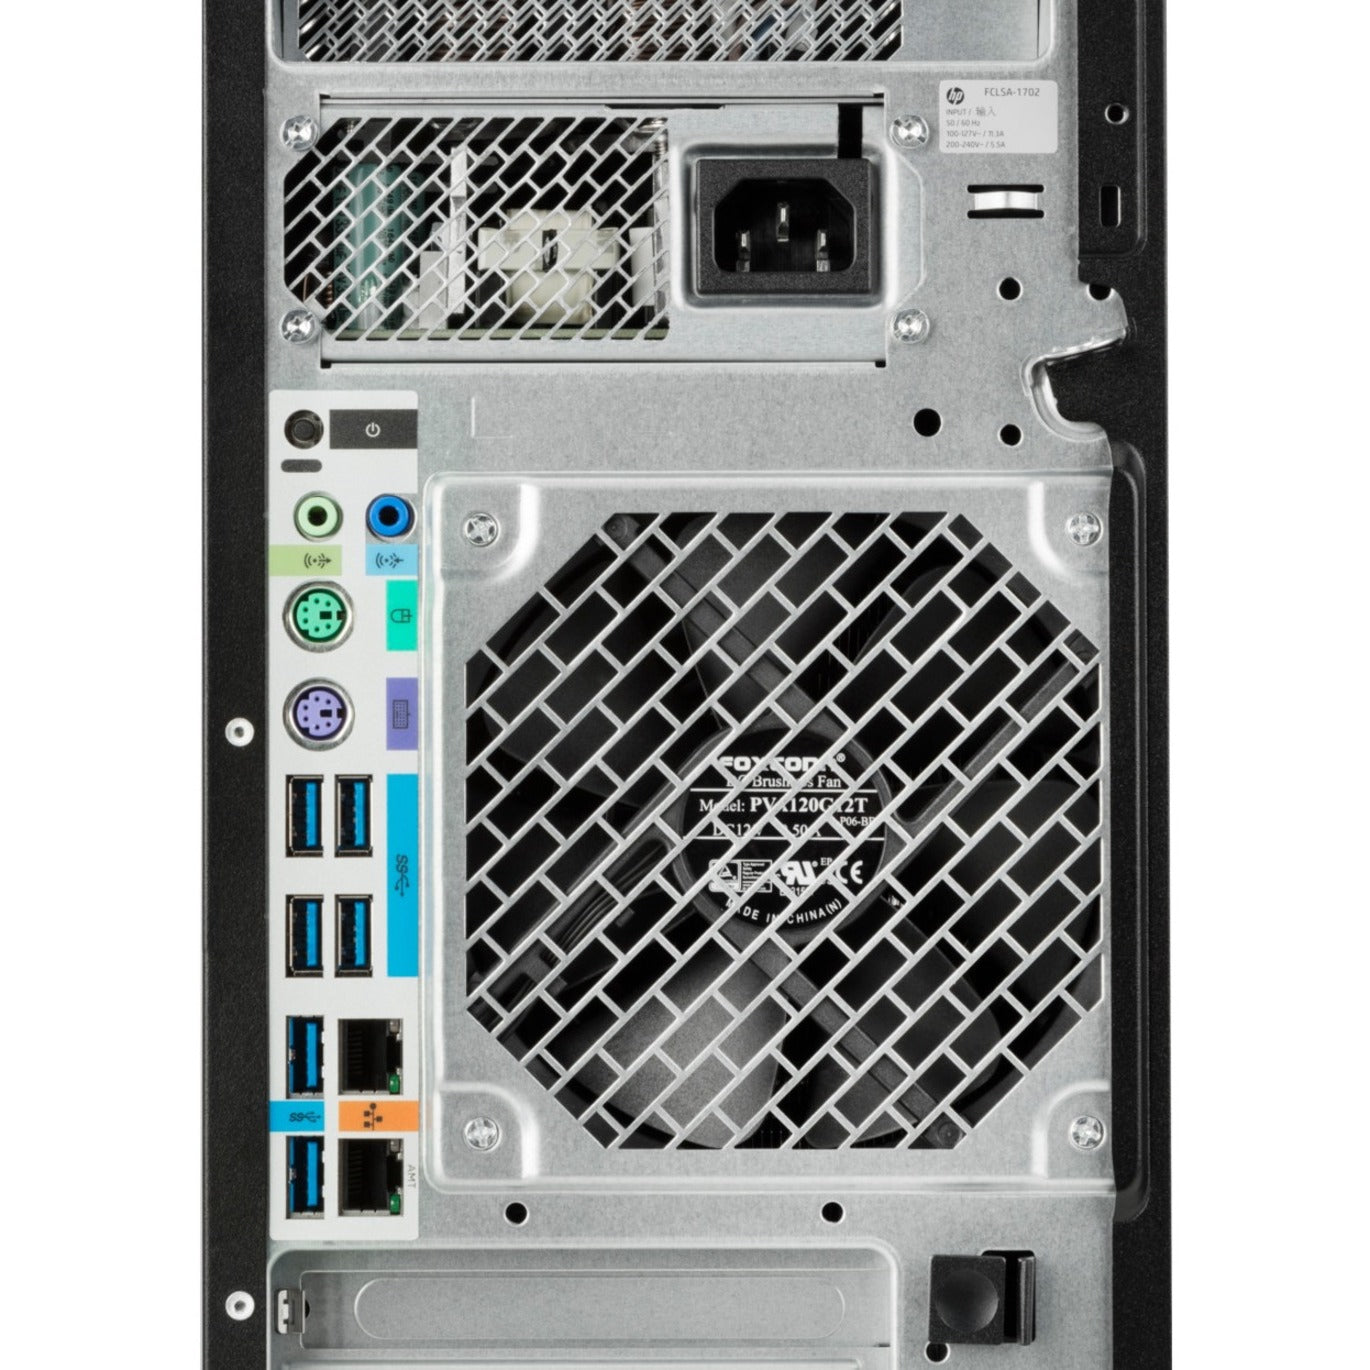 HP Workstation Z4 G4 Tower, Intel Xeon Quad-core W-2225 4.10 GHz, 16GB RAM, 512GB SSD